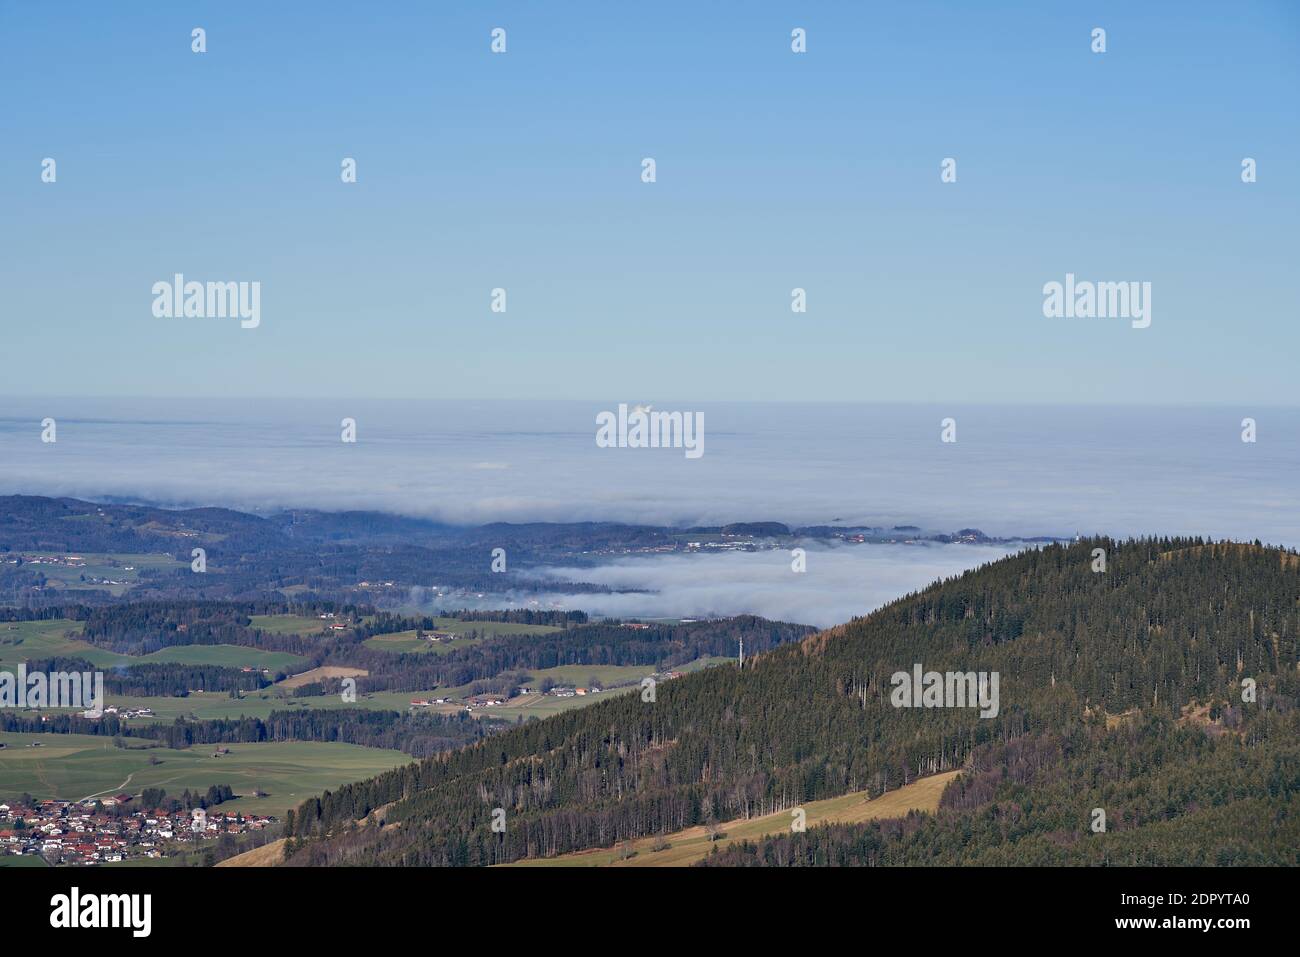 Munich from afar, hidden in fog Stock Photo